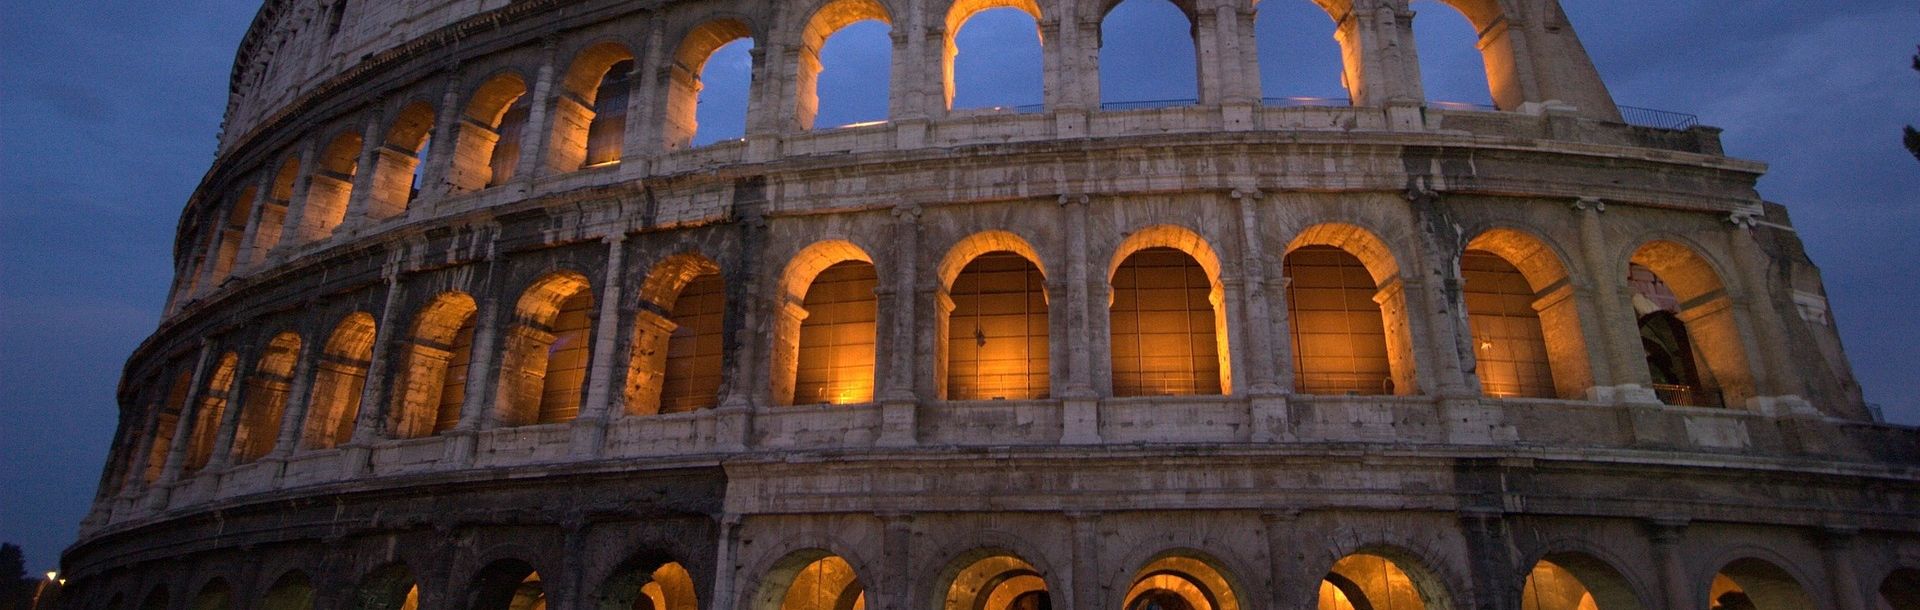 Latein Titel Colosseum 1920x610